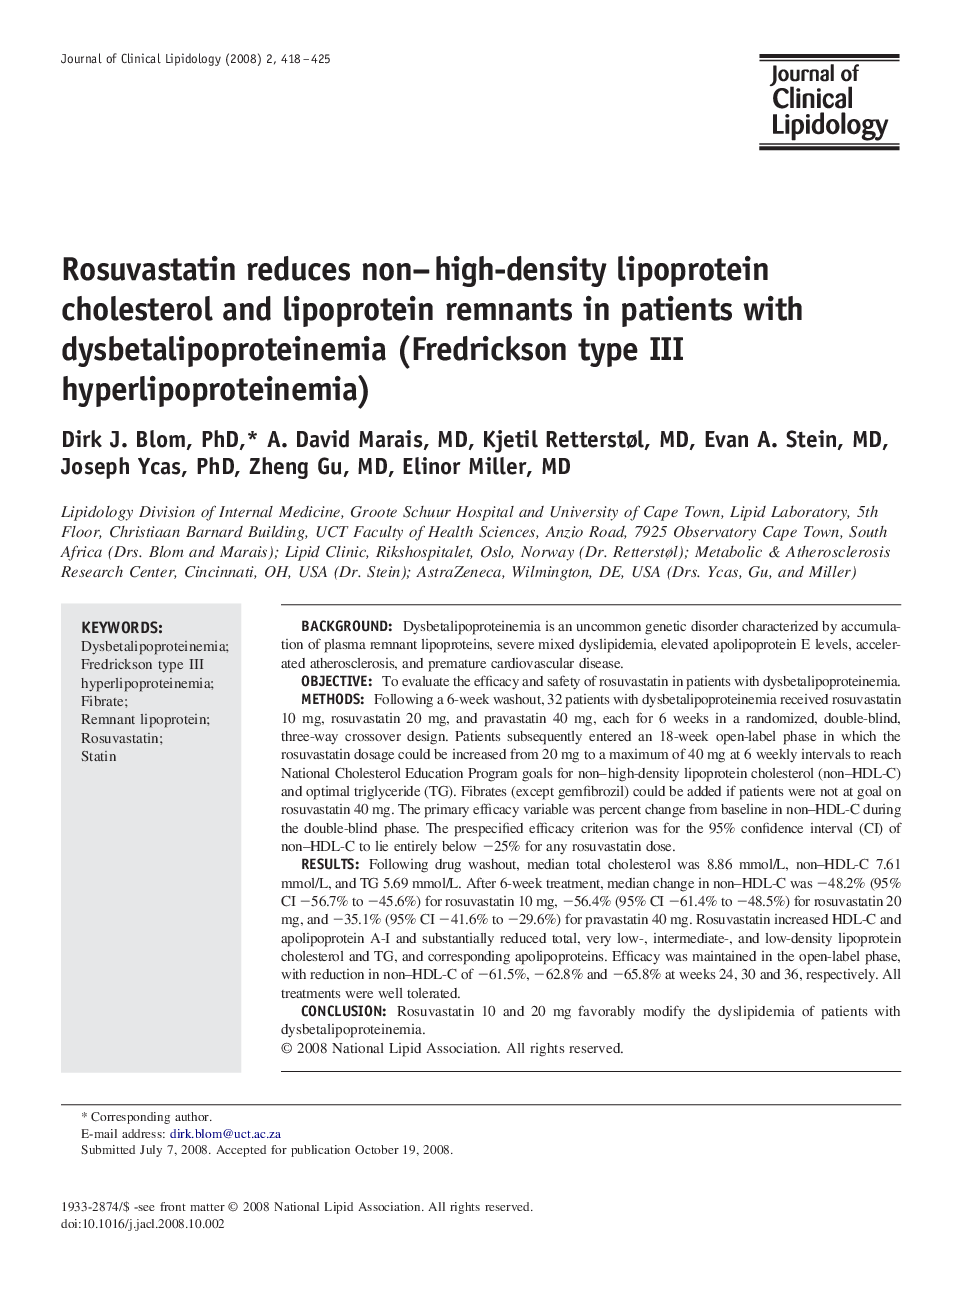 Rosuvastatin reduces non-high-density lipoprotein cholesterol and lipoprotein remnants in patients with dysbetalipoproteinemia (Fredrickson type III hyperlipoproteinemia)